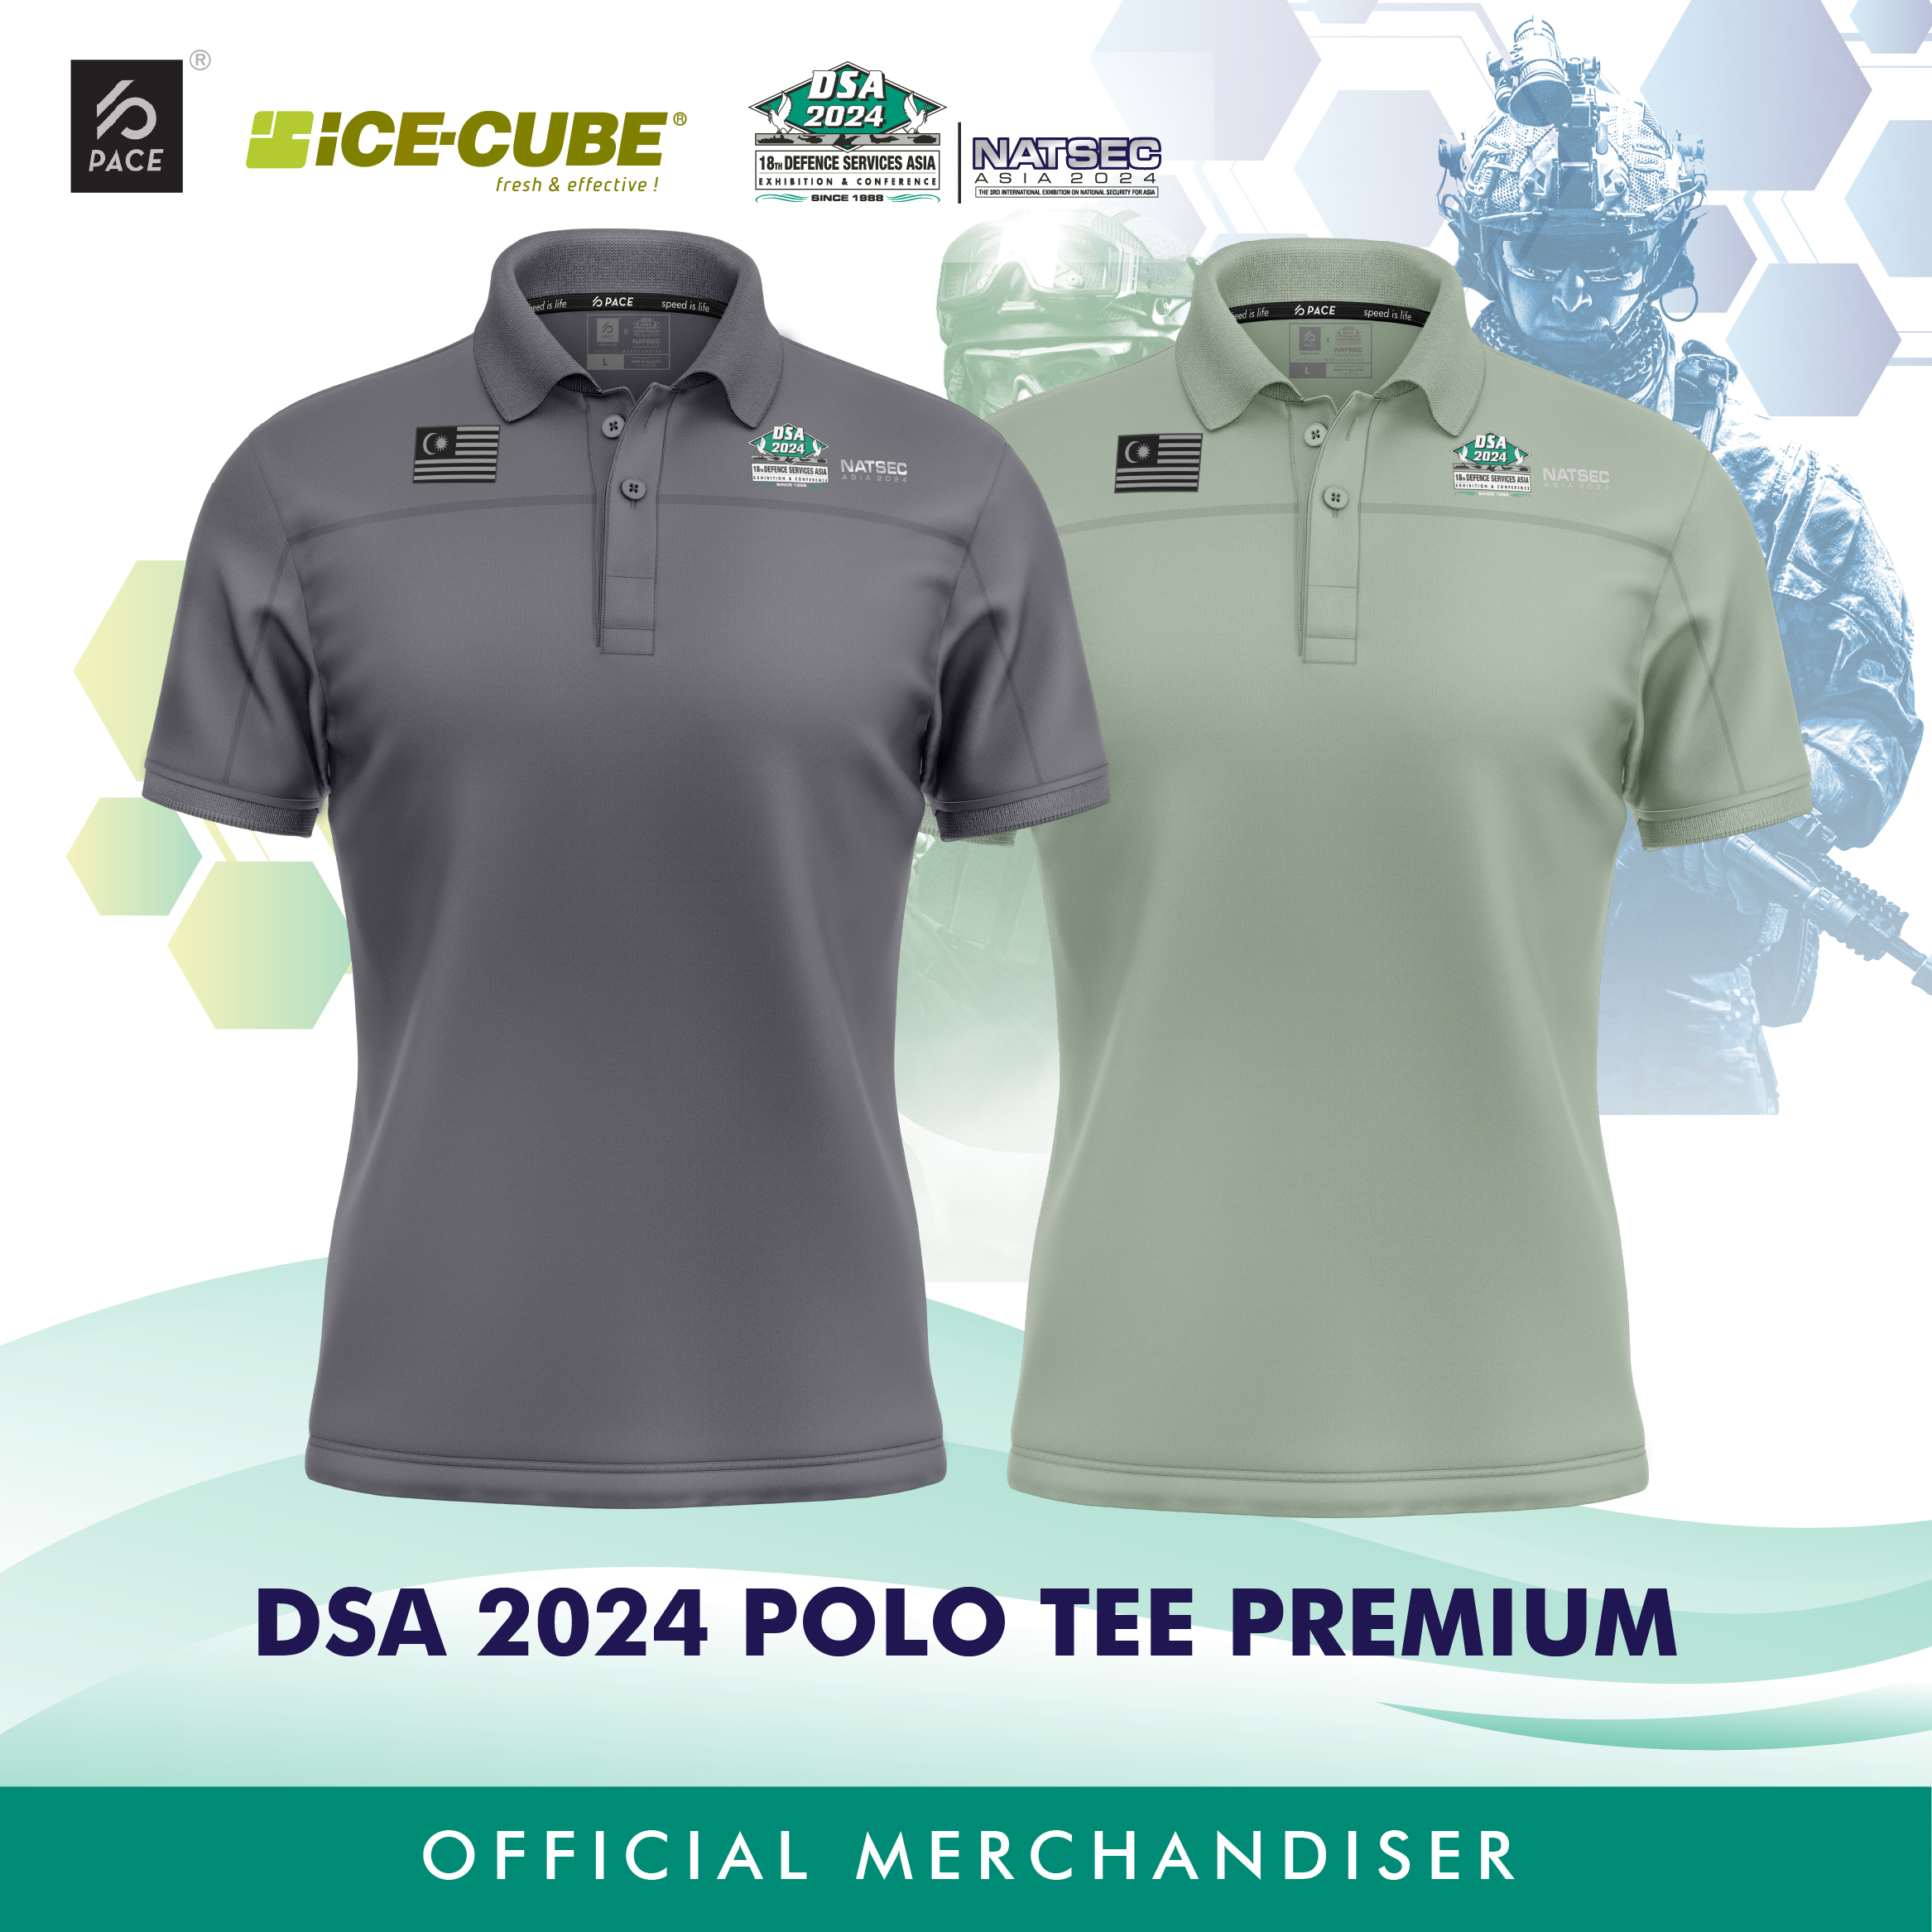 DSA 2024 Polo Premium